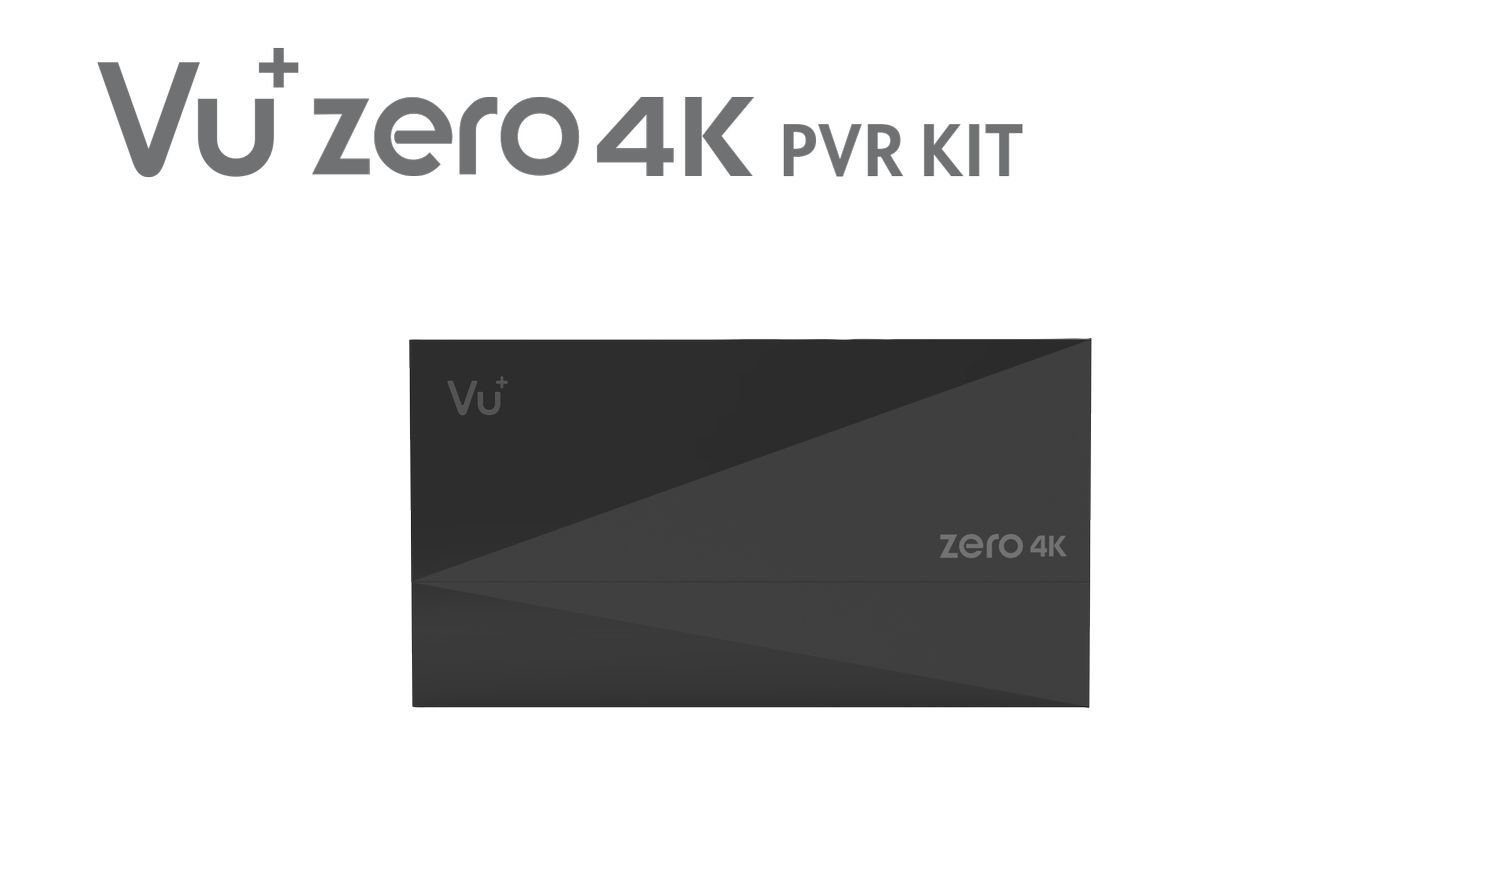 VU+ 2TB, Inklusive HDD, 4K Zero PVR schwarz Tuner Kit VU+